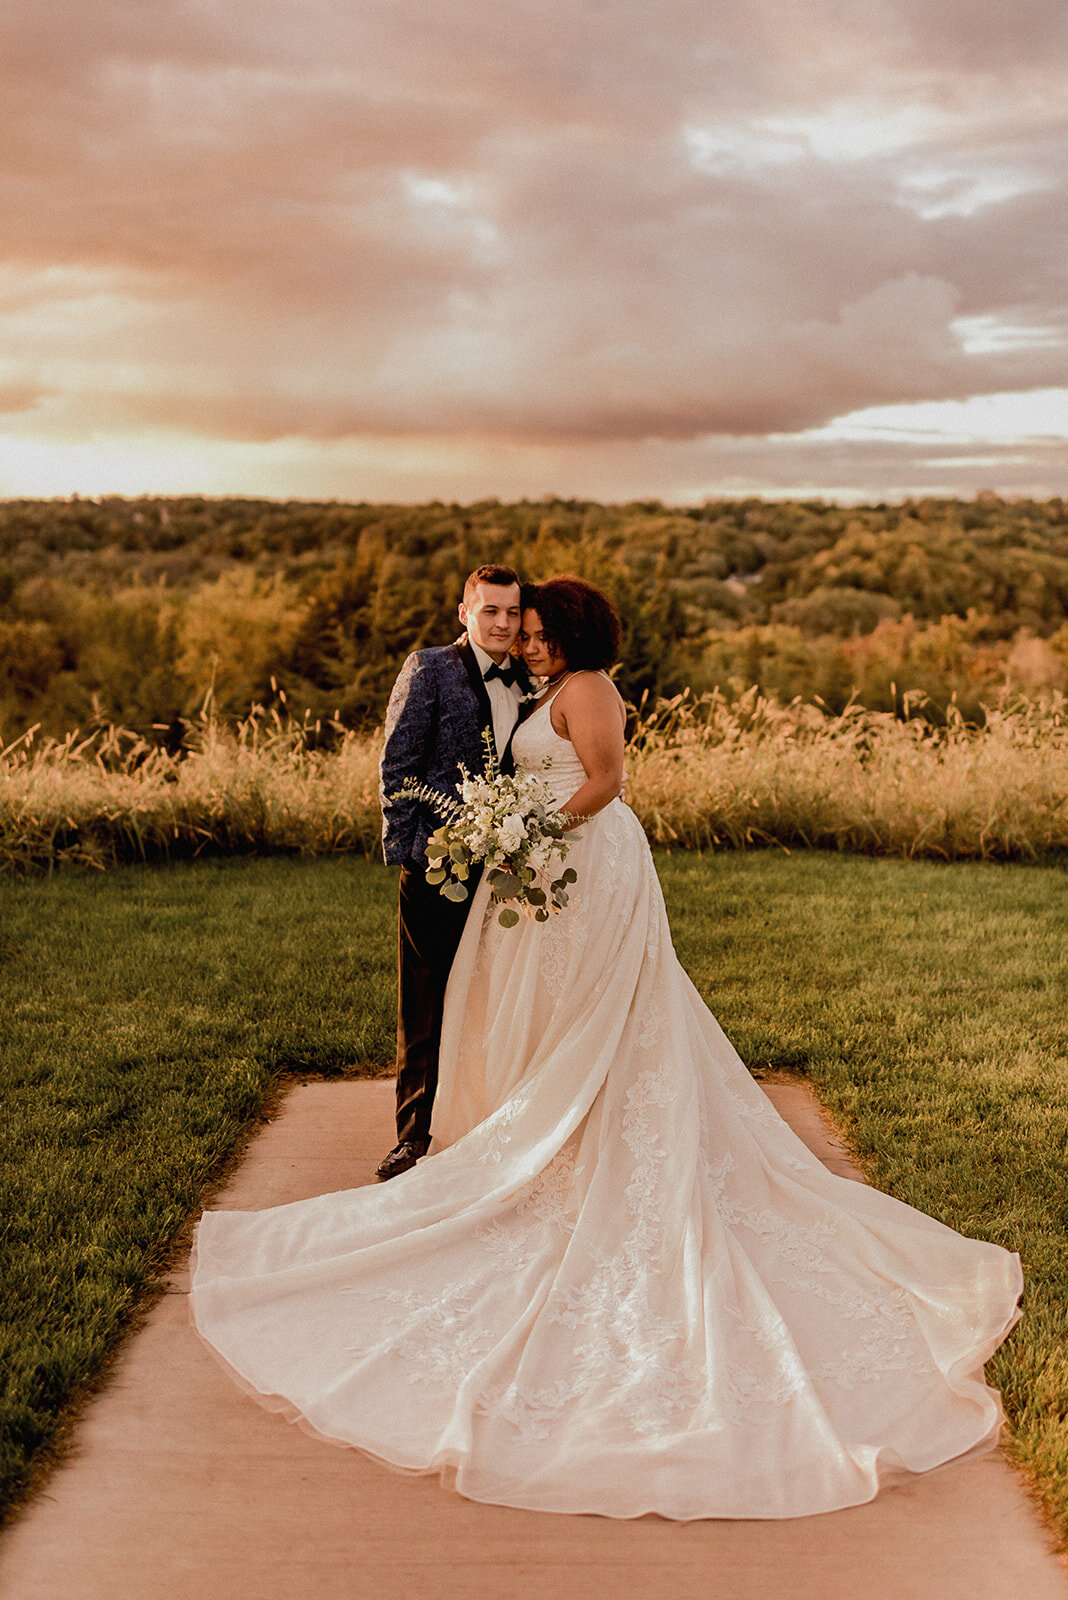 Melissa Cervantes Photography - Midwest + Destination Wedding Photographer - Anne + Ellis Styled Shoot Edits-415.jpg